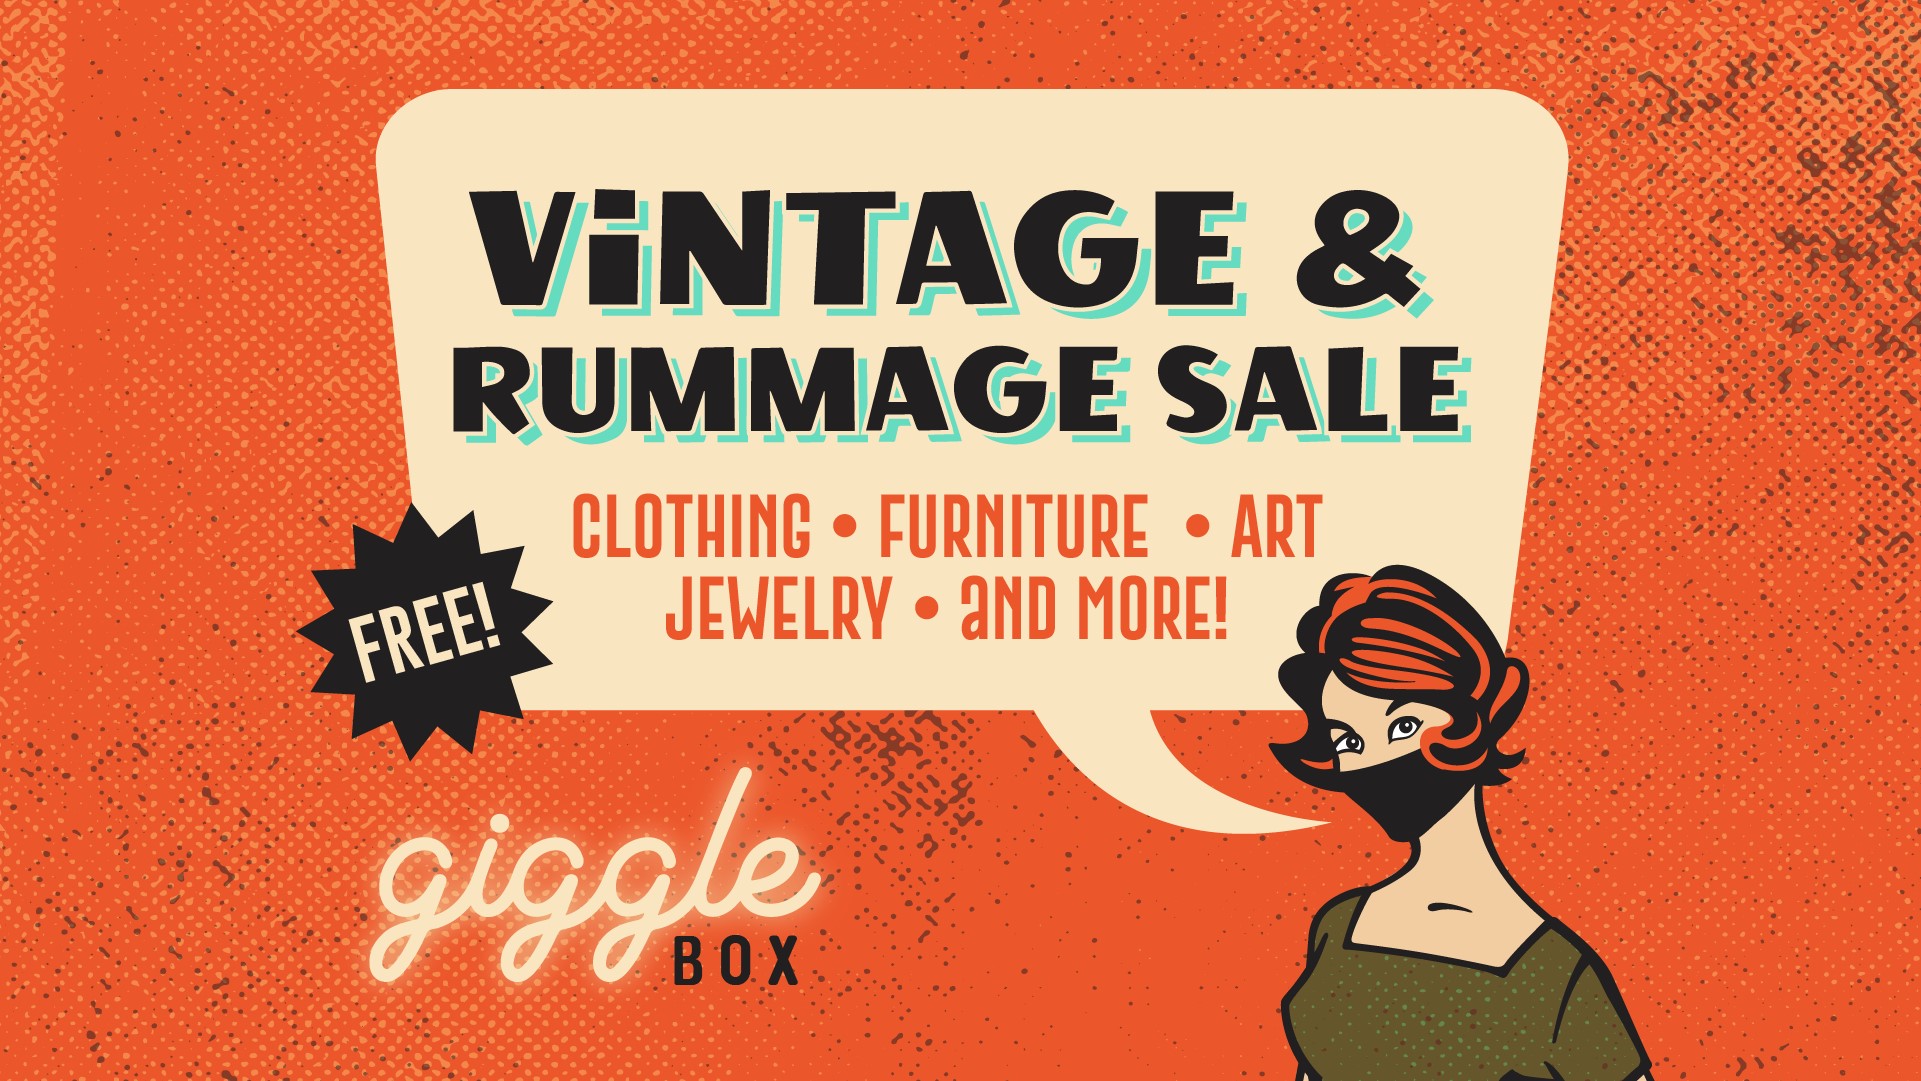 Vintage & Rummage Sale